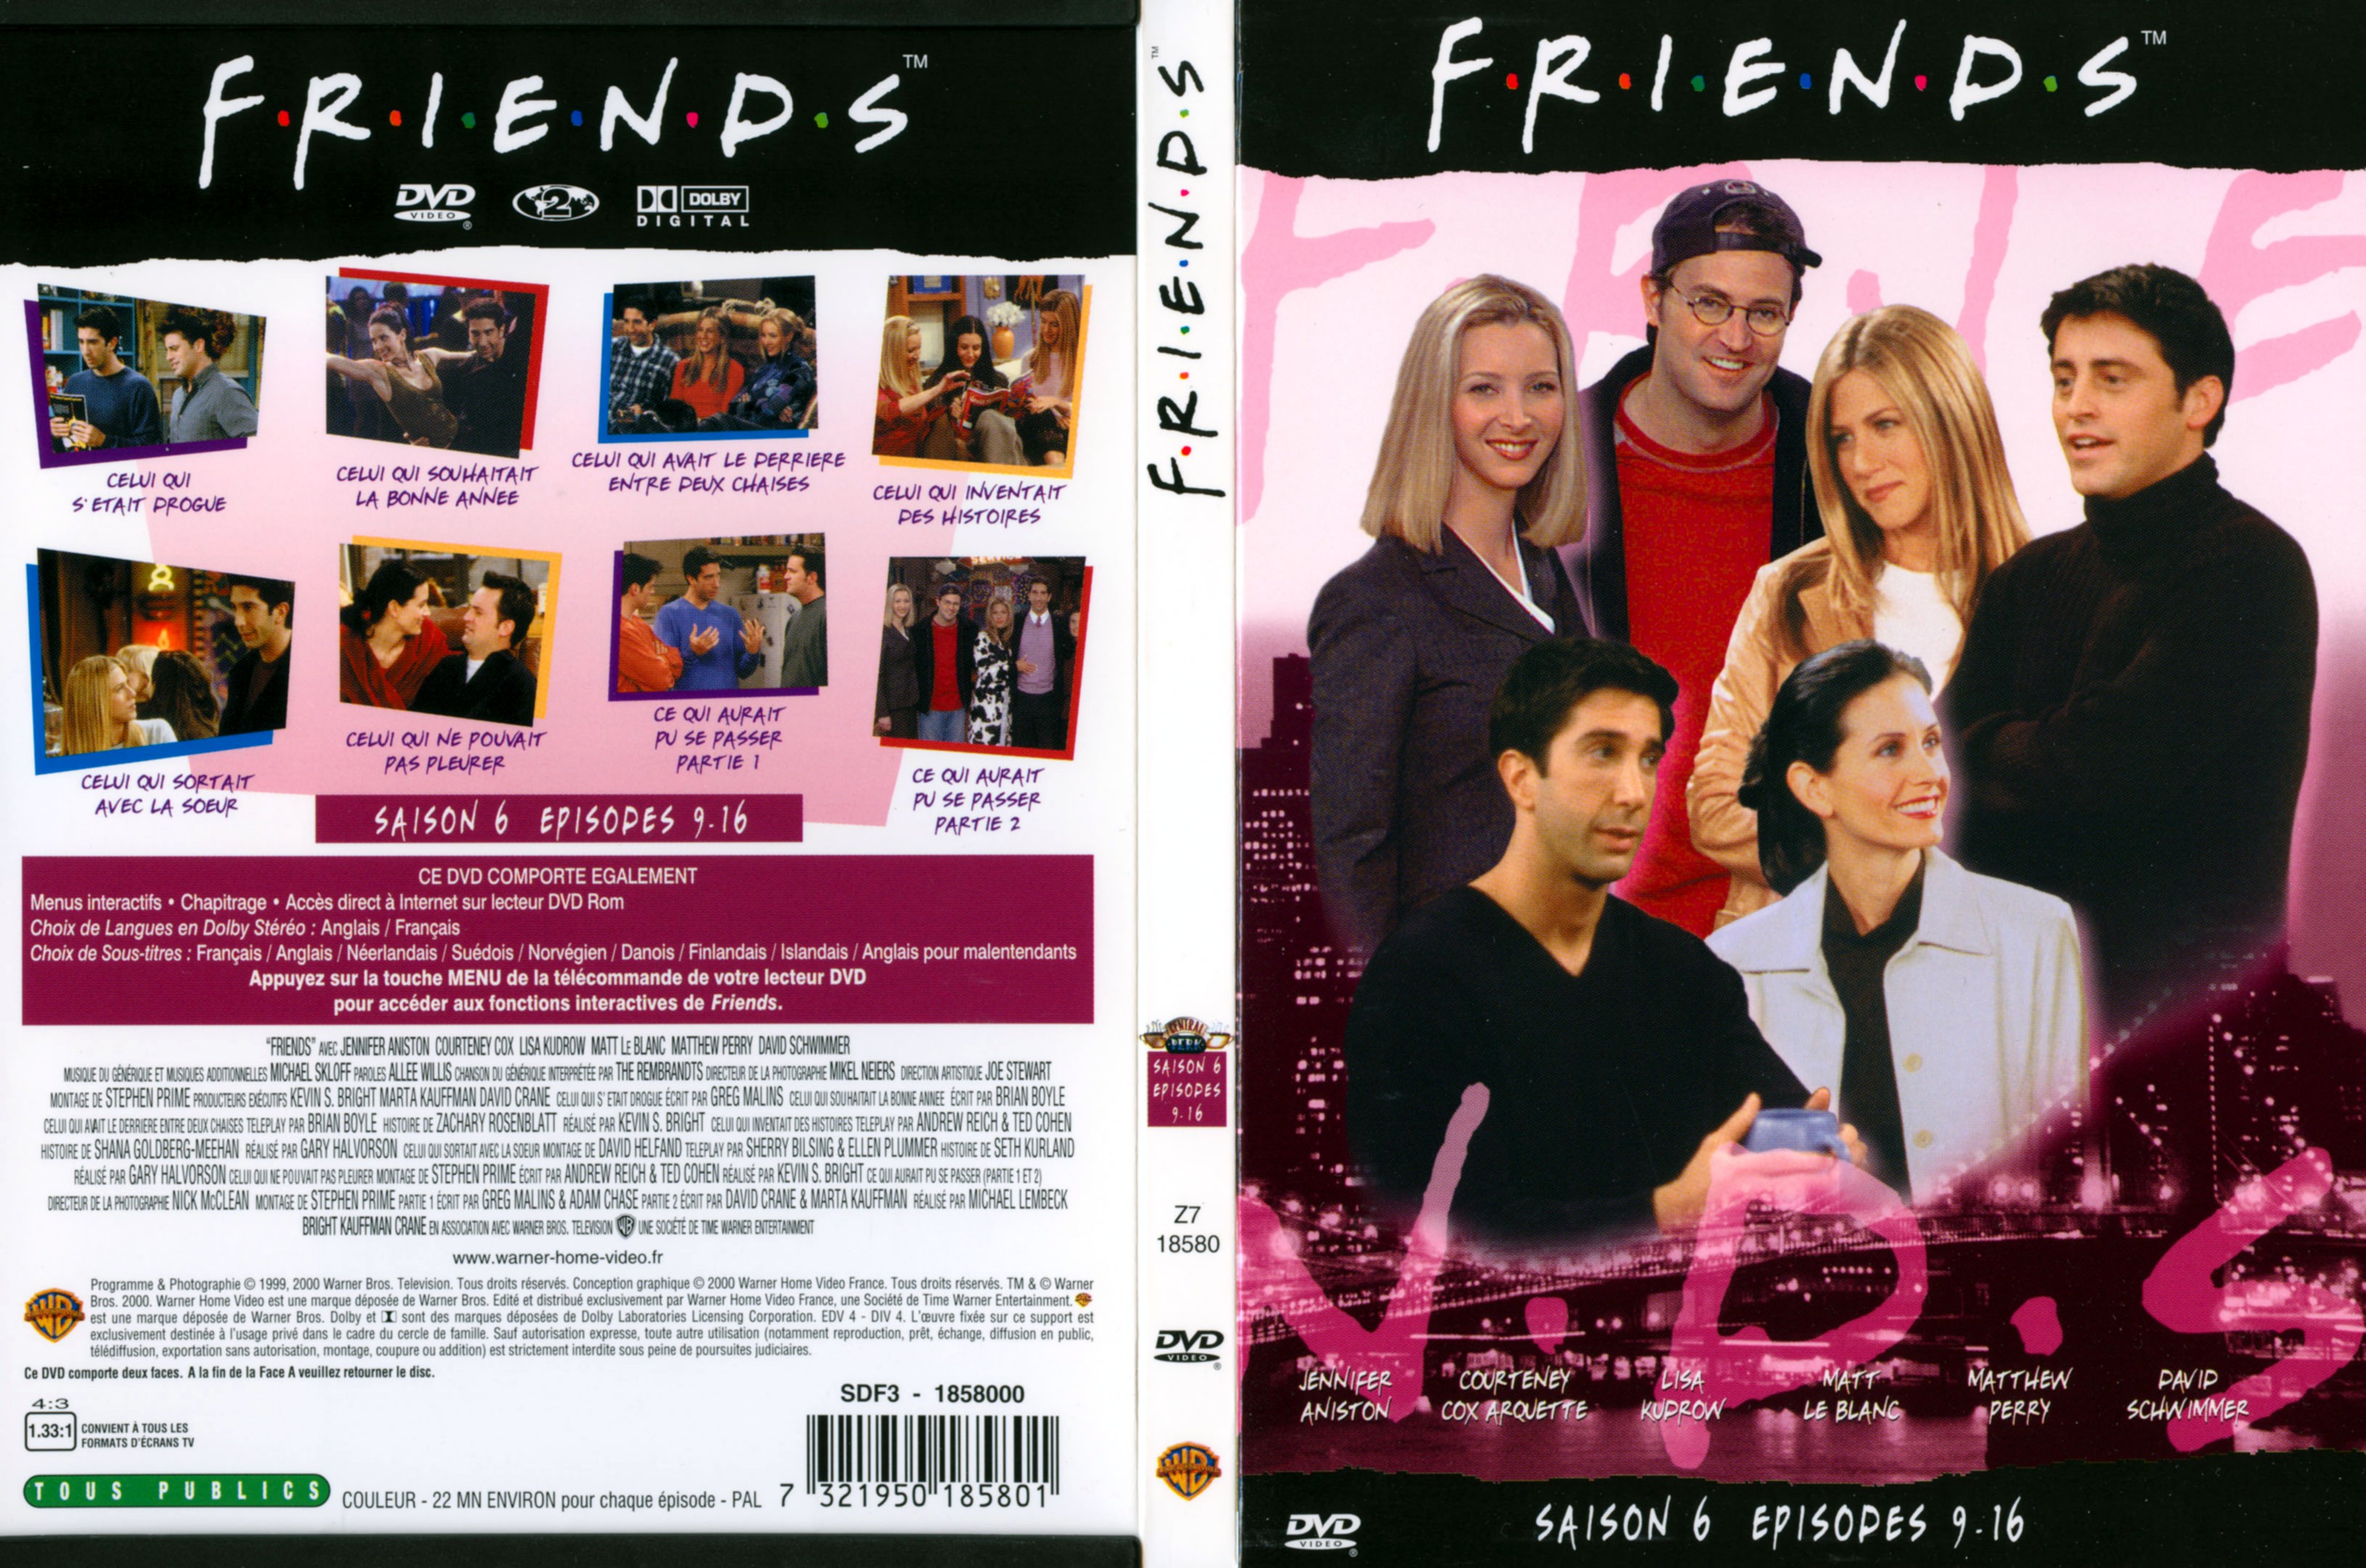 Jaquette DVD Friends saison 6 dvd 2